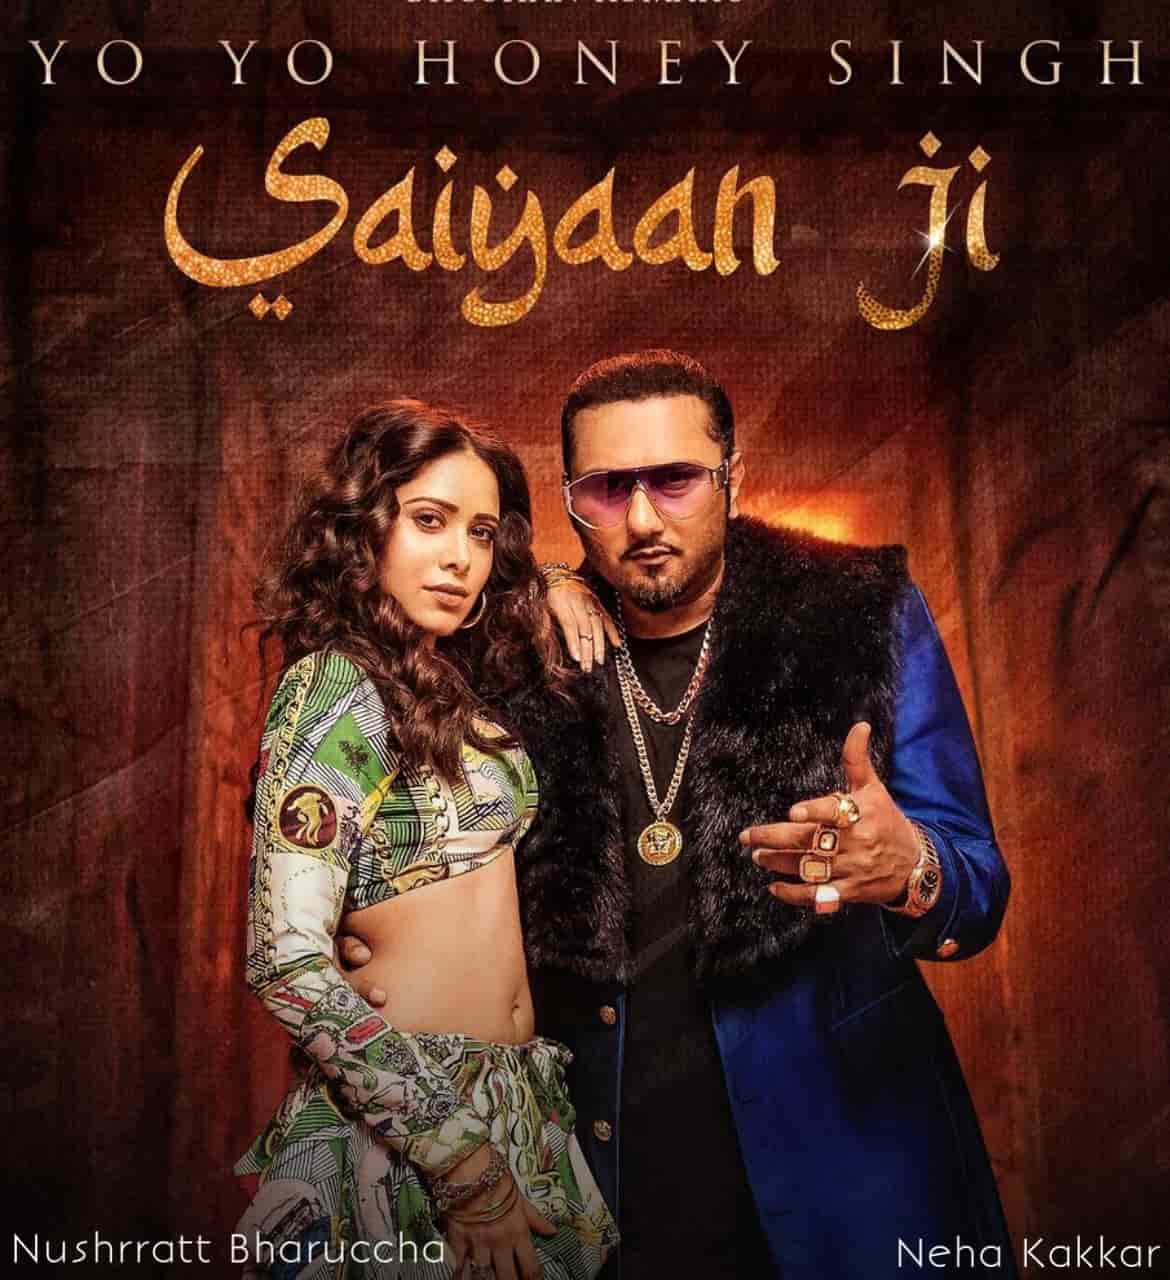 Saiyaan Ji Most Awaited Song Image Features Yo Yo Honey Singh And Neha Kakkar